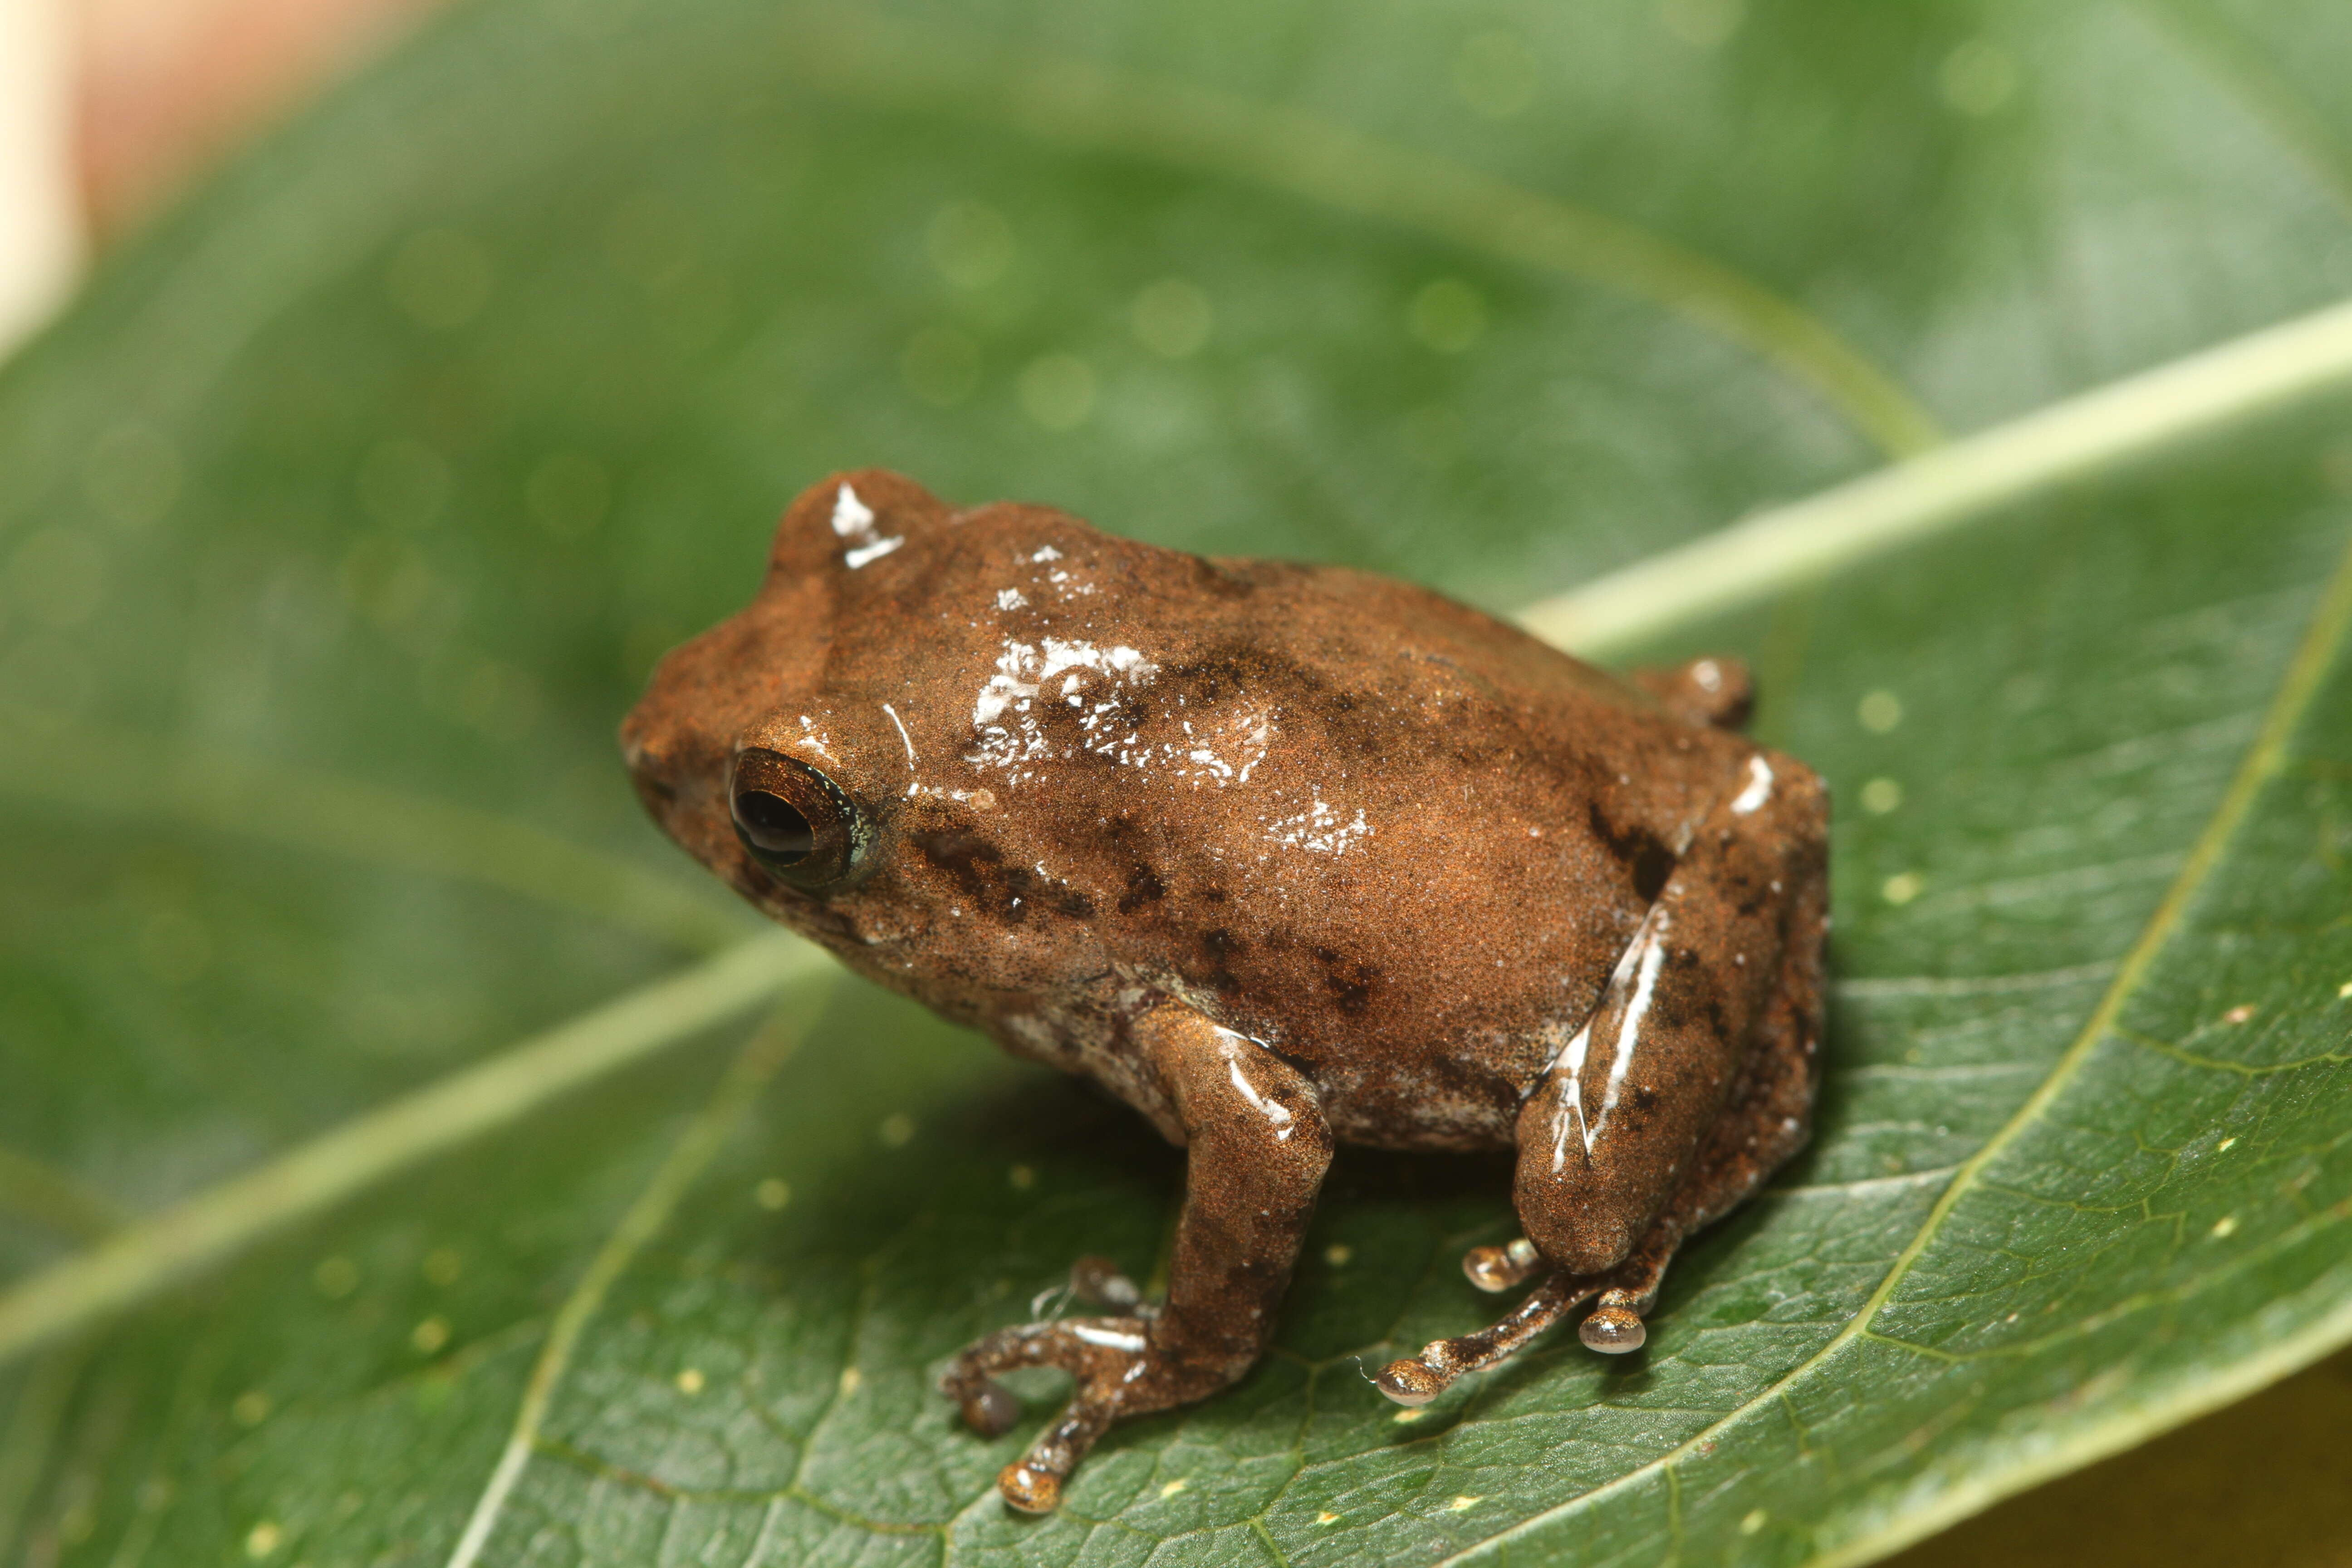 Image of Kudremukh bush frog